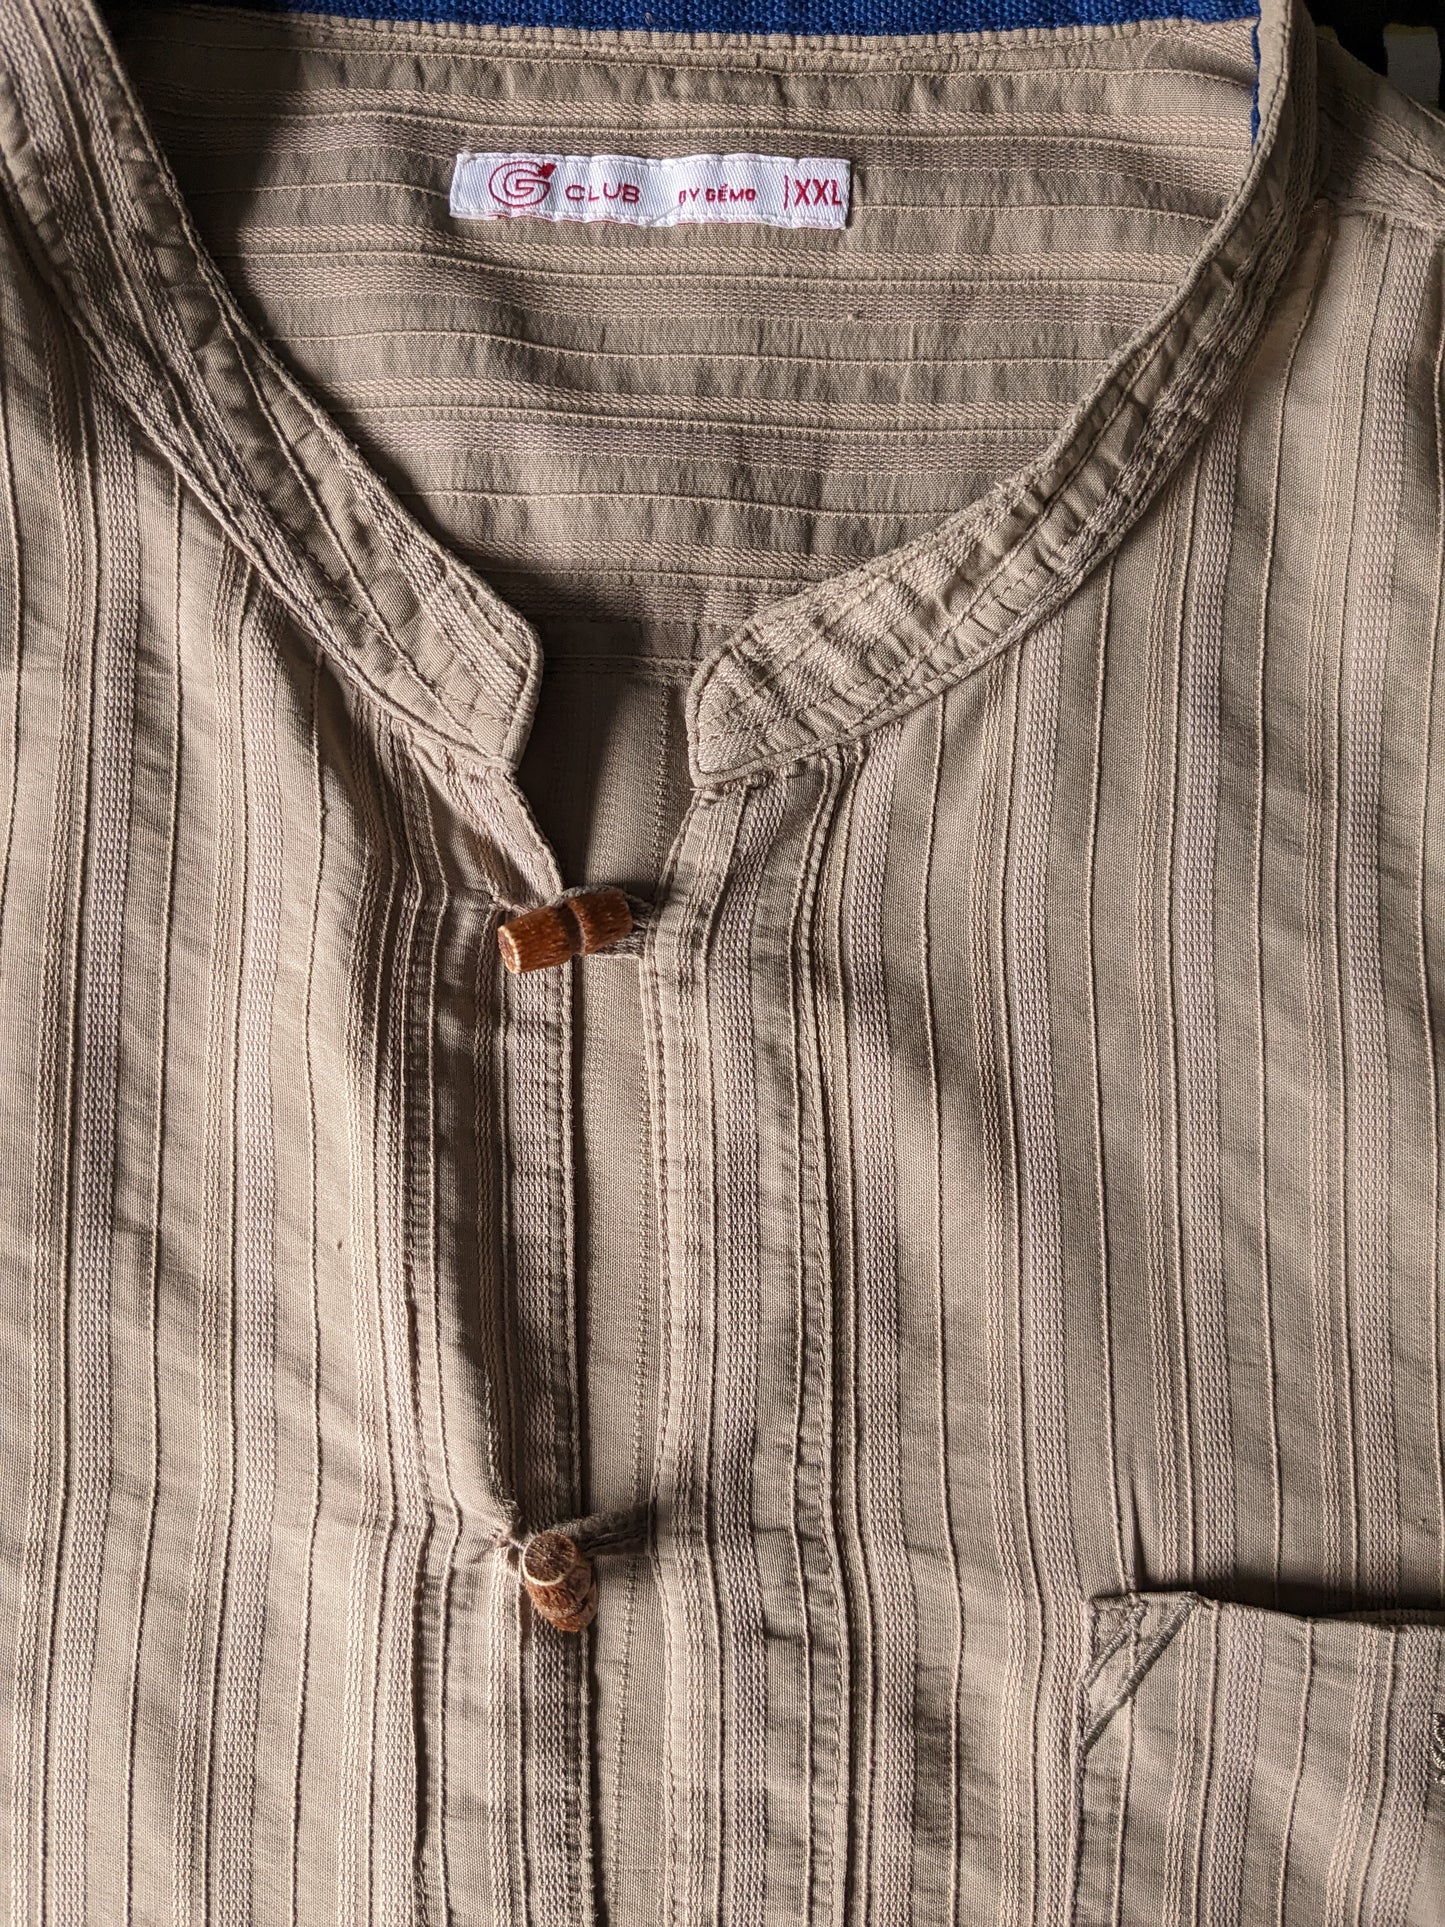 G-Club shirt / polo Mao / opstaande kraag met houten knoopjes. Lichtbruin motief. Maat XXL / 2XL.